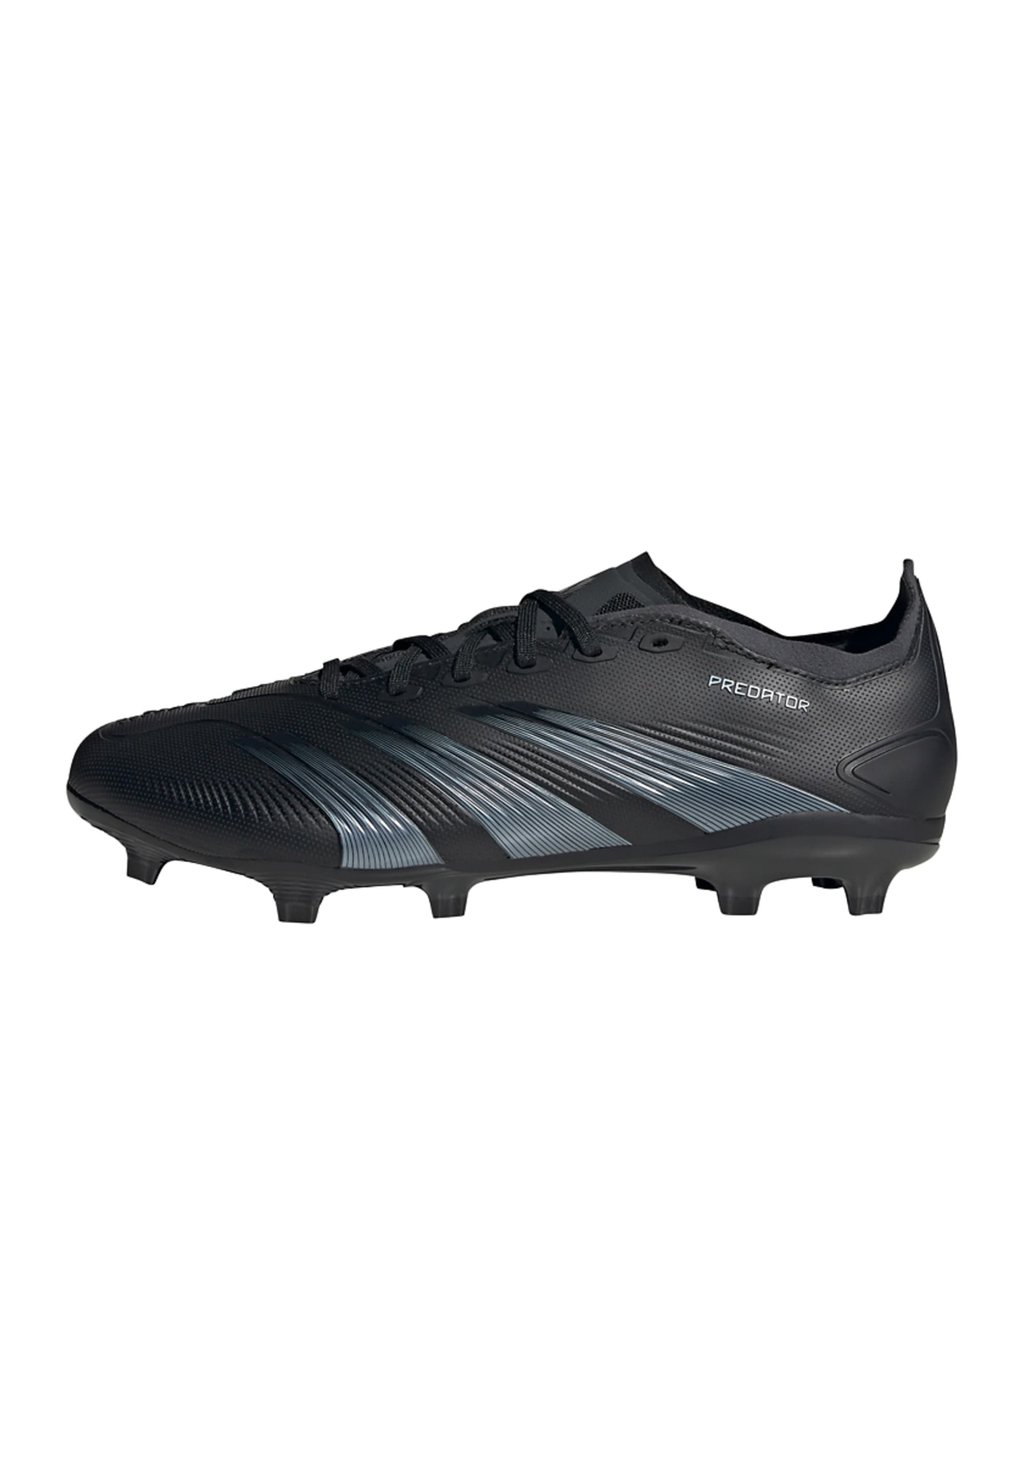 Футбольные бутсы с шипами PREDATOR LEAGUE FG adidas Performance, цвет core black/carbon/core black кроссовки adidas sportswear zapatillas core black core black carbon